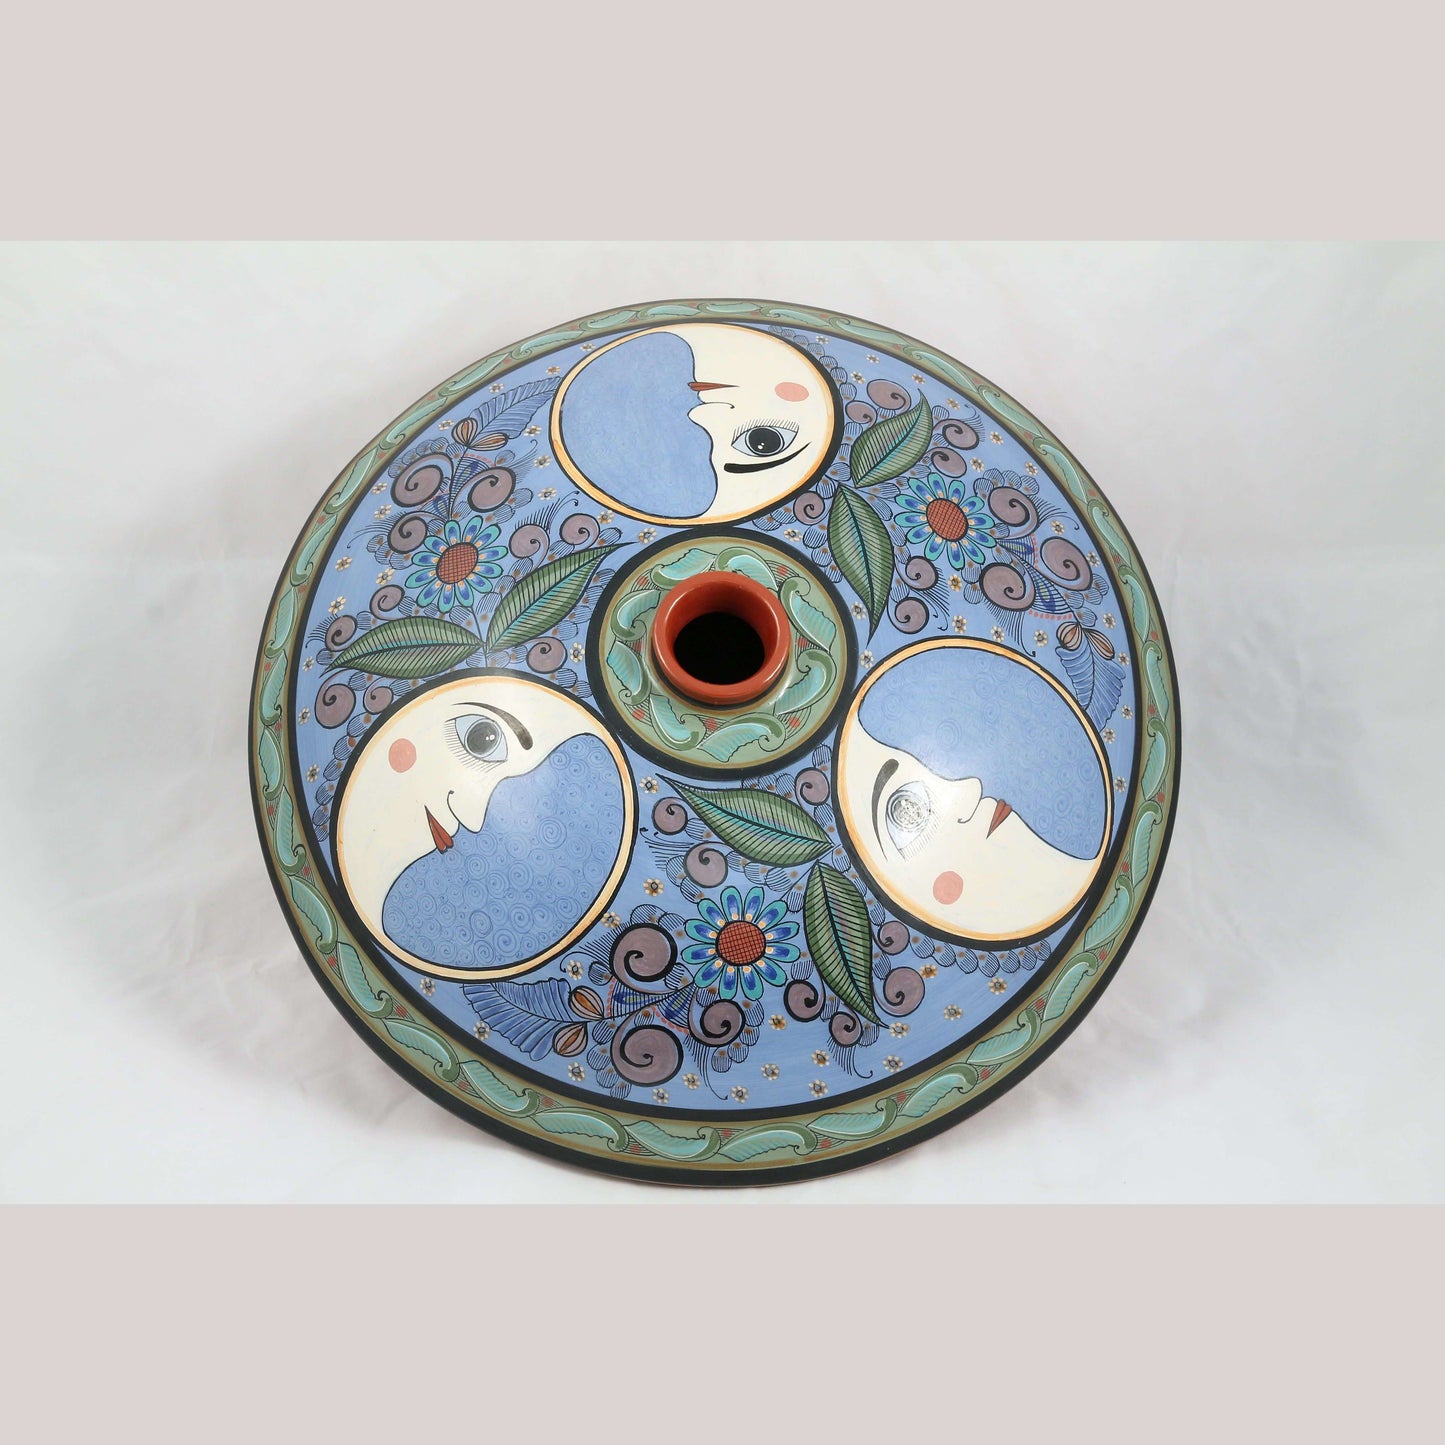 Huge 3 Footed Ceramic Vessel Mexico Fine Folk Art Master Jose Luis Cortez 3 Moon